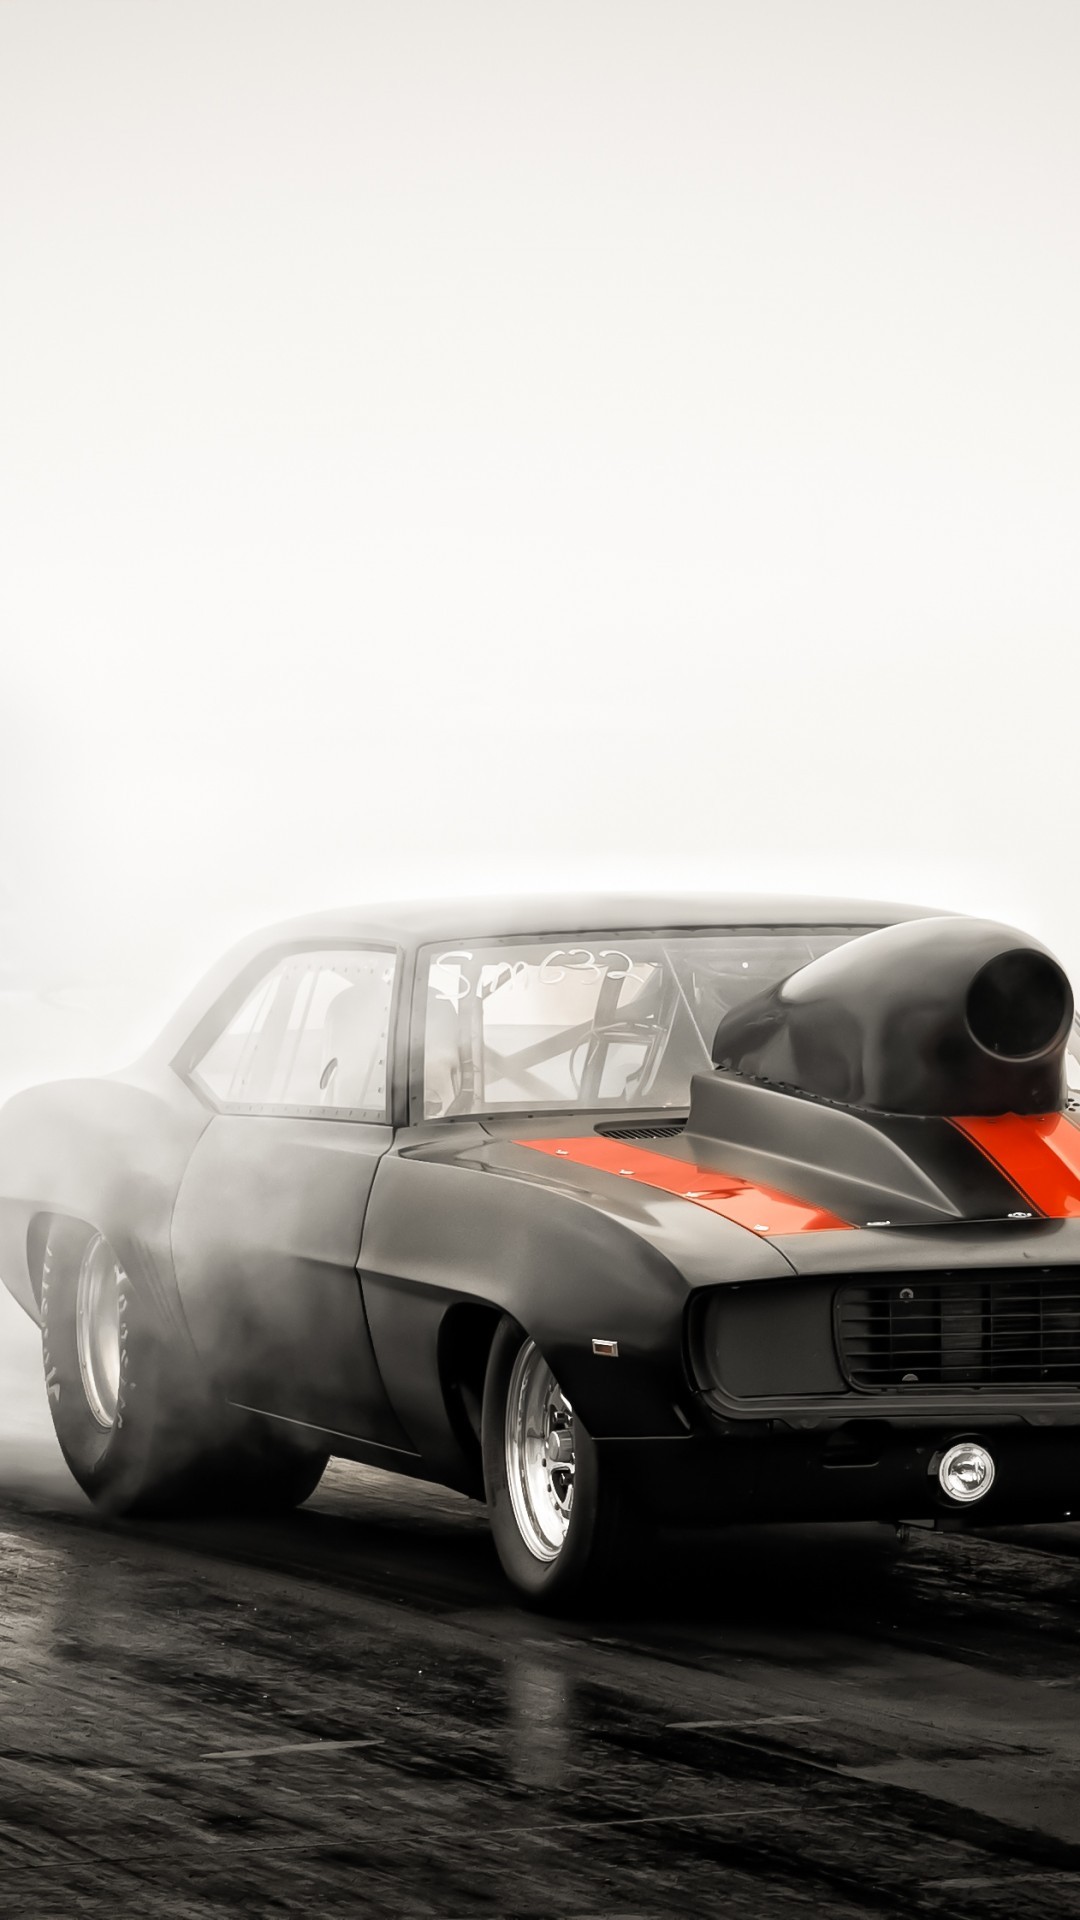  Скачать 1080x1920 Drag Racing Smoke Cars Обои для iPhone 8 iPhone 7 Plus iPhone 6+ Sony Xperia Z HTC One - WallpaperMaiden